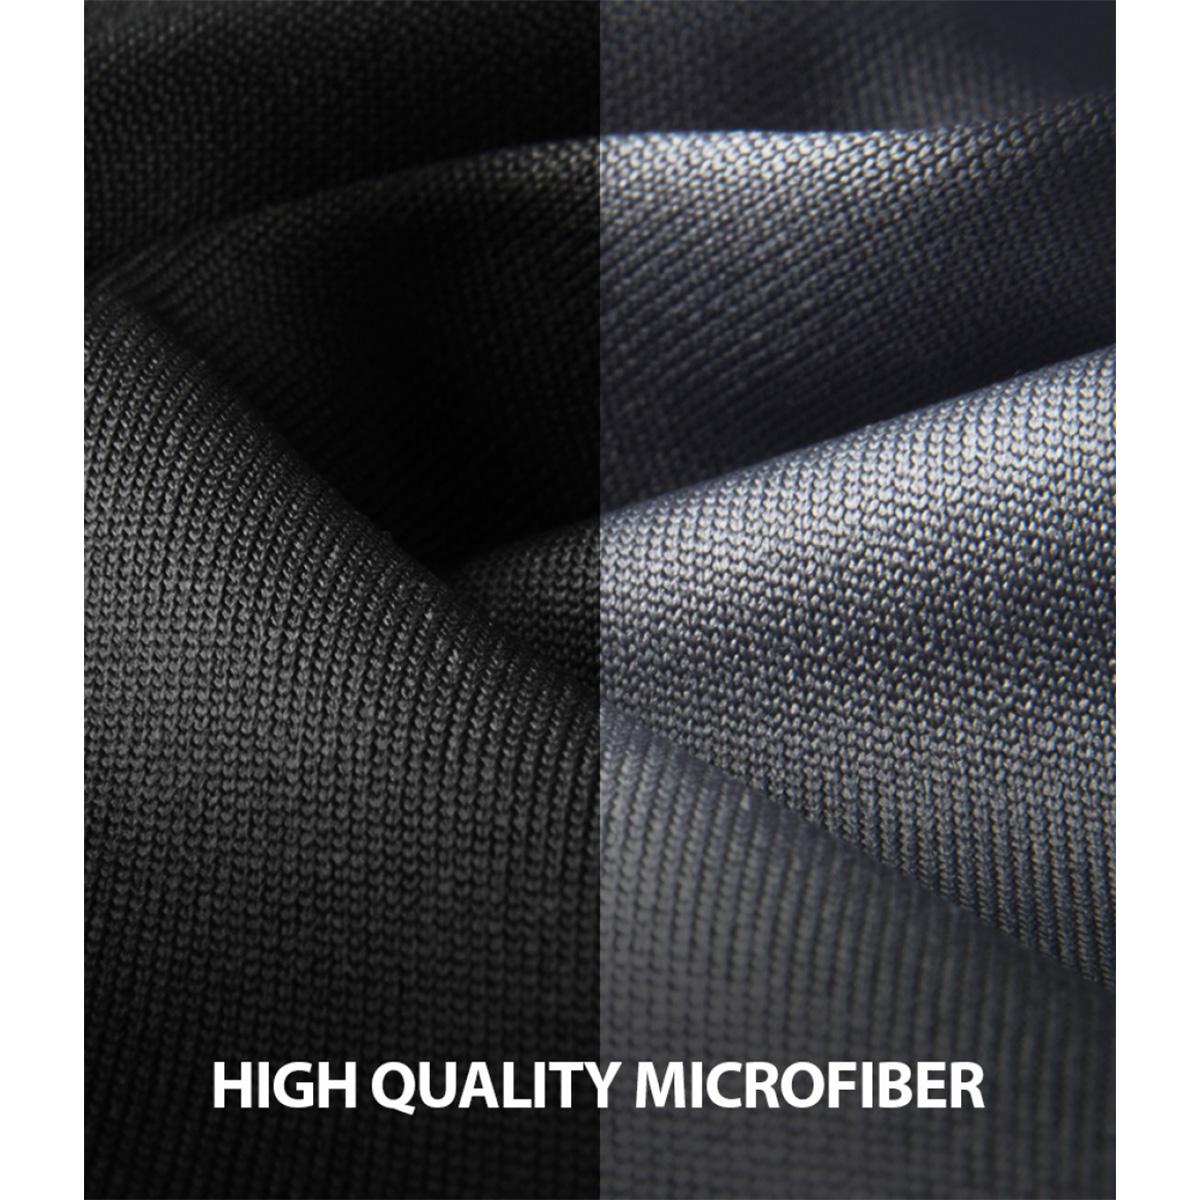 Ringke Lupin Premium Microfiber Cloth Large (Gray)